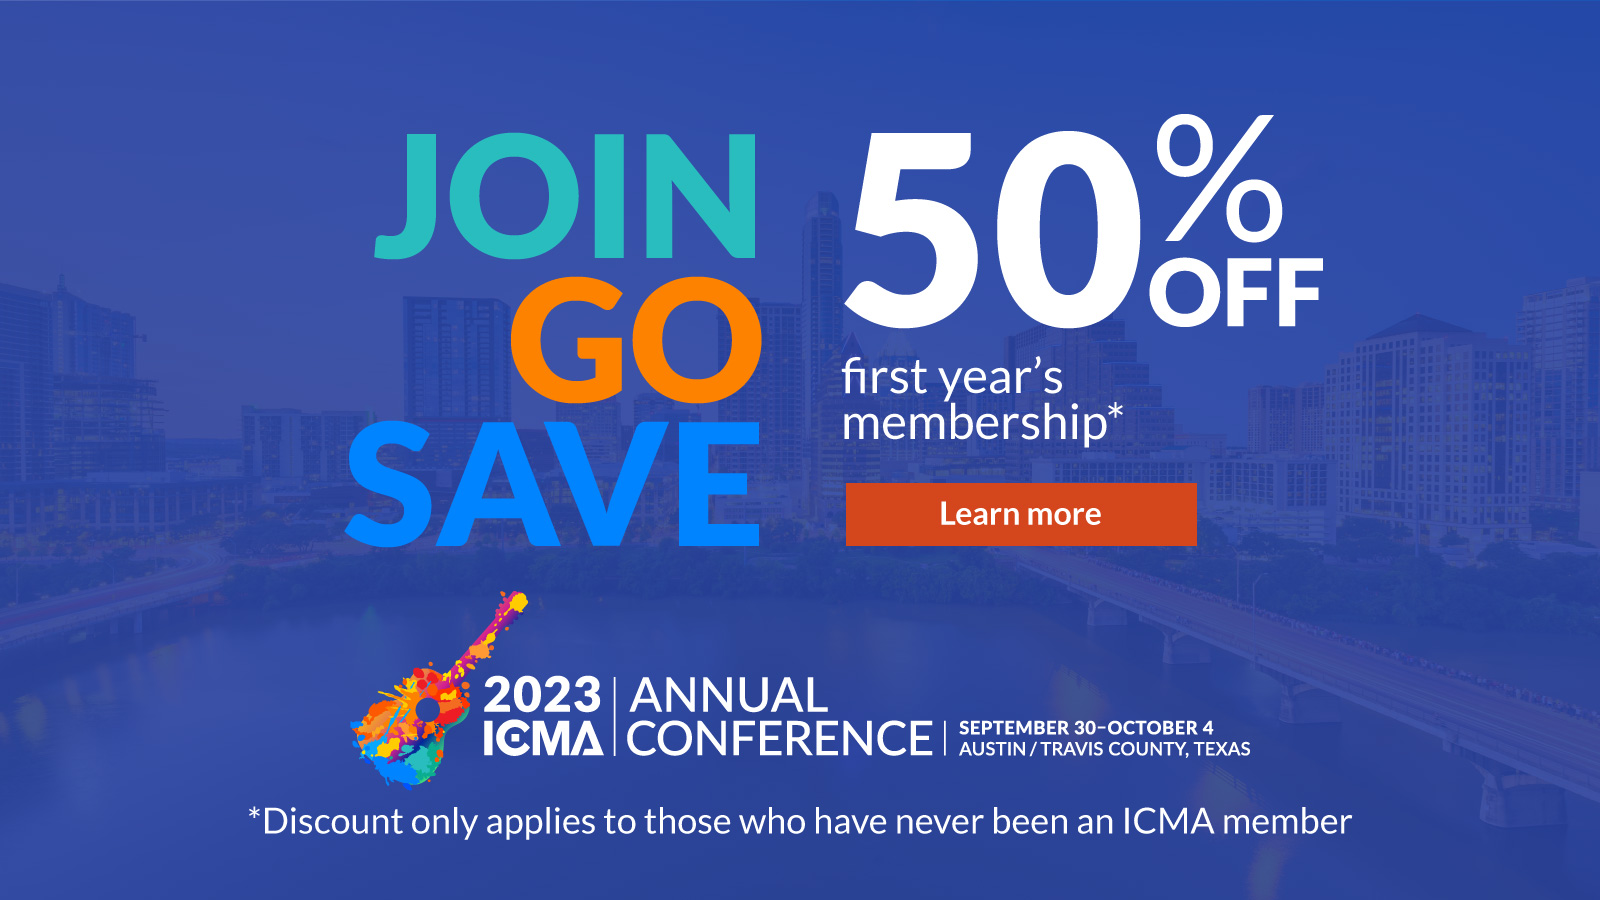 Annual Conference ICMA Conference